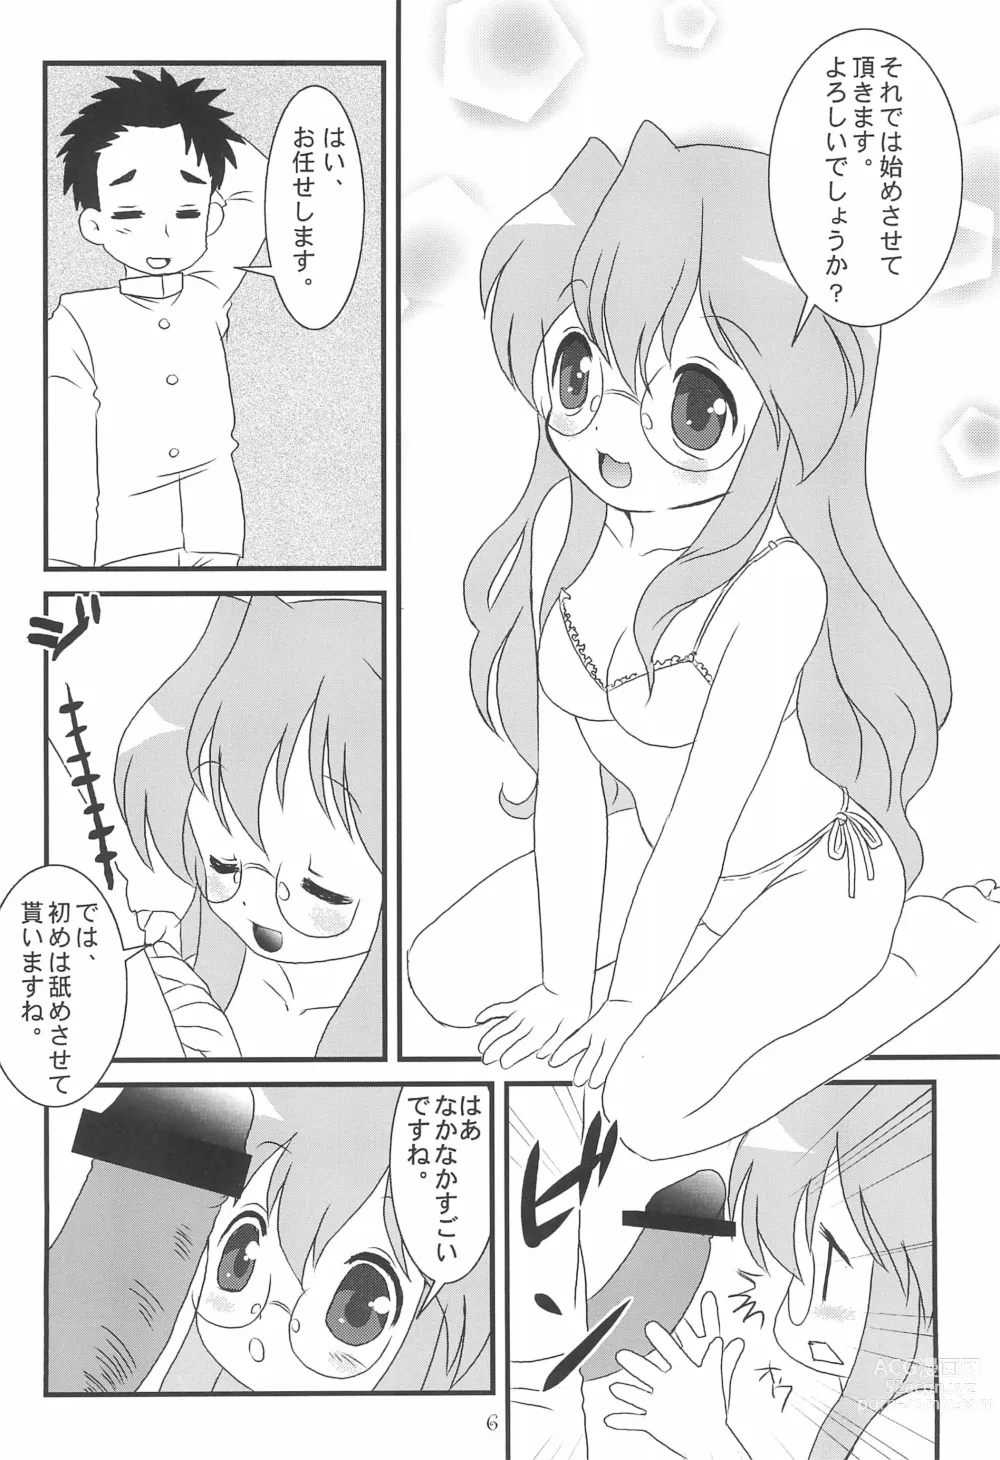 Page 8 of doujinshi Retort